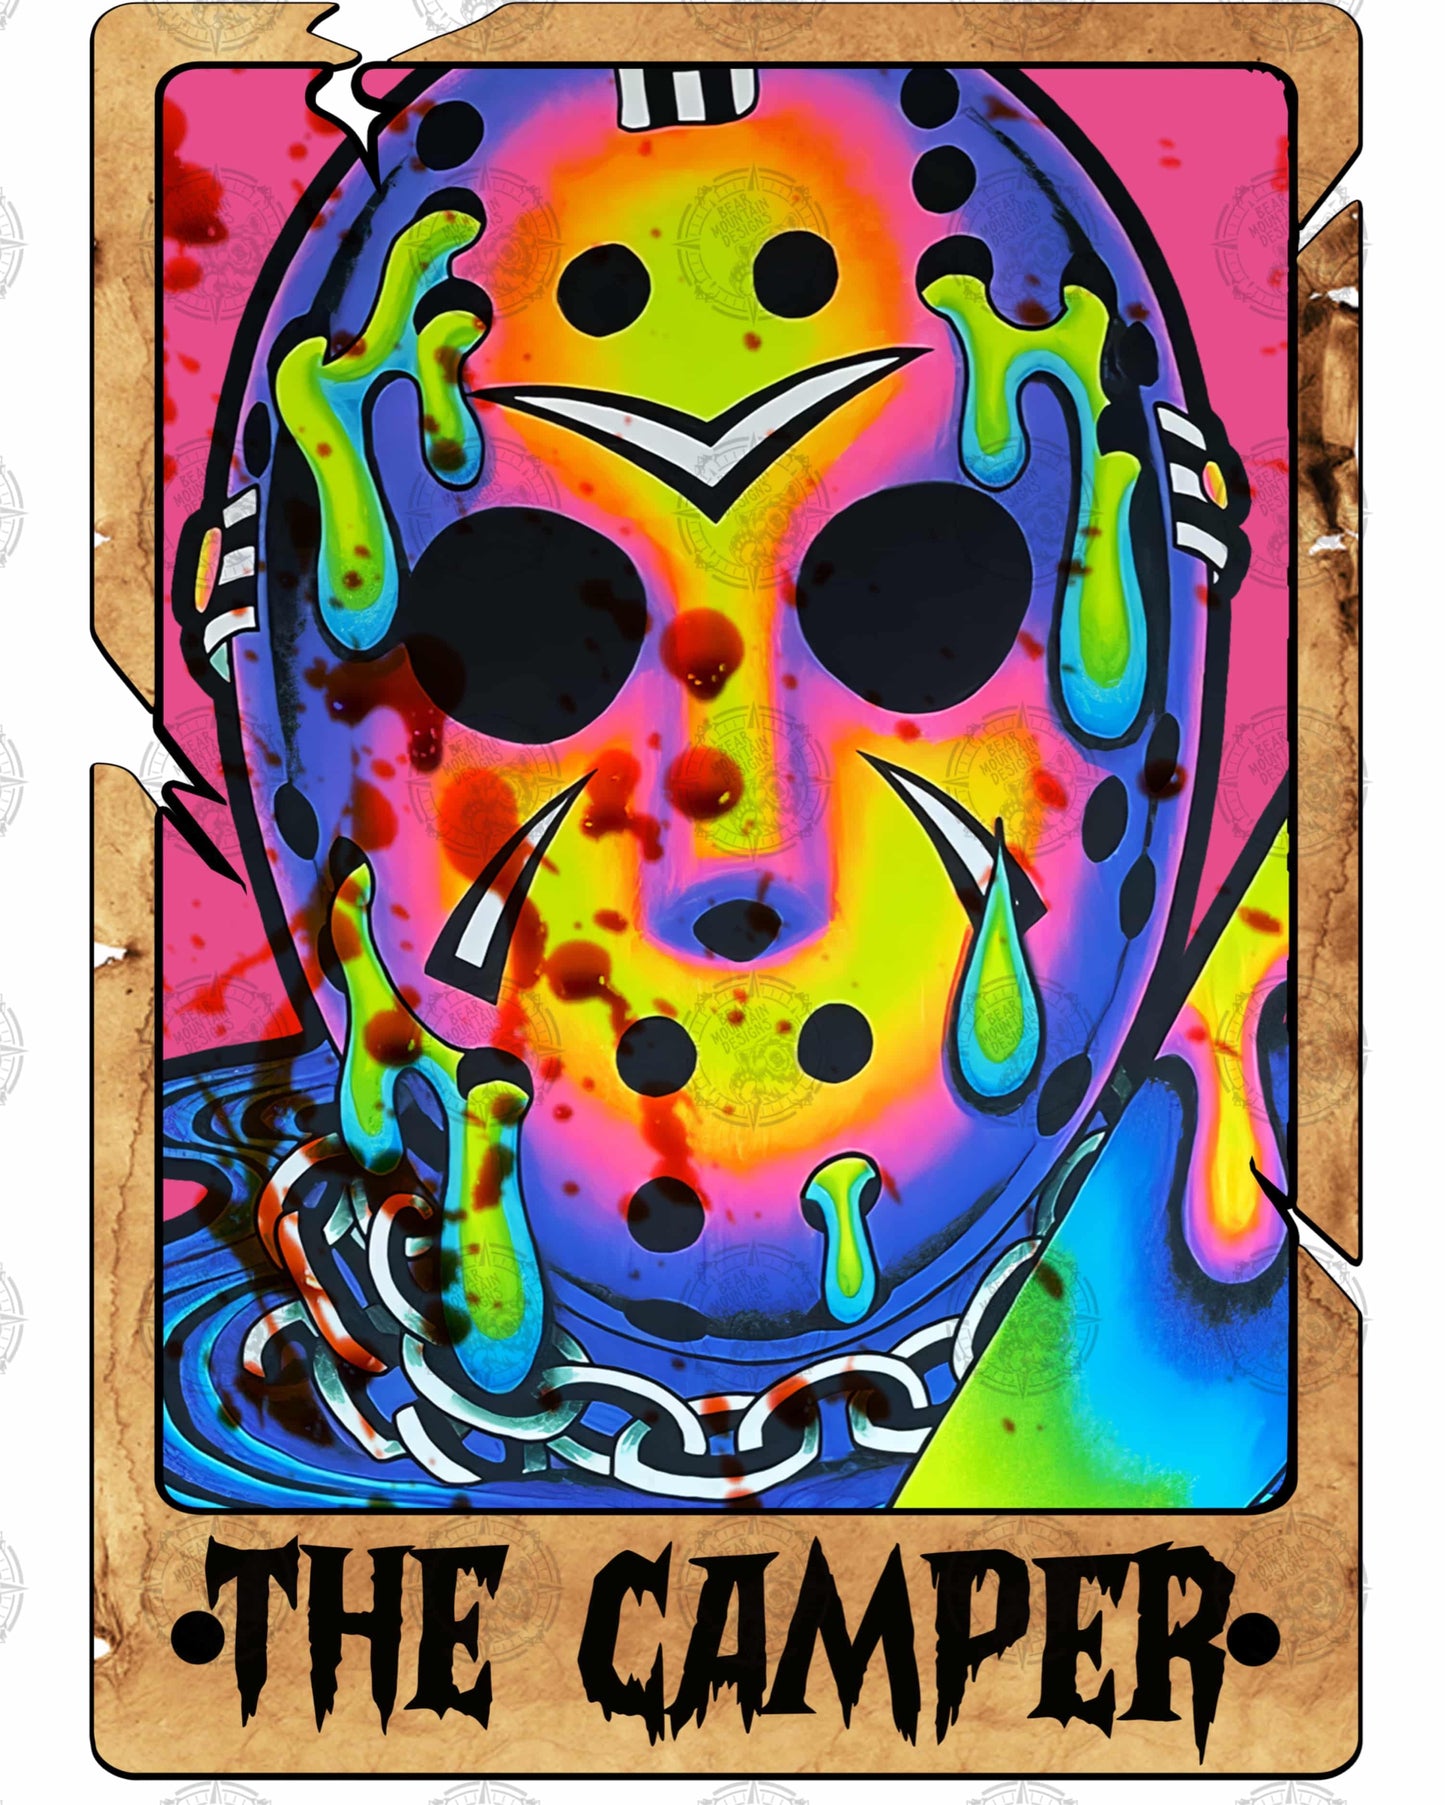 Jason - The Camper